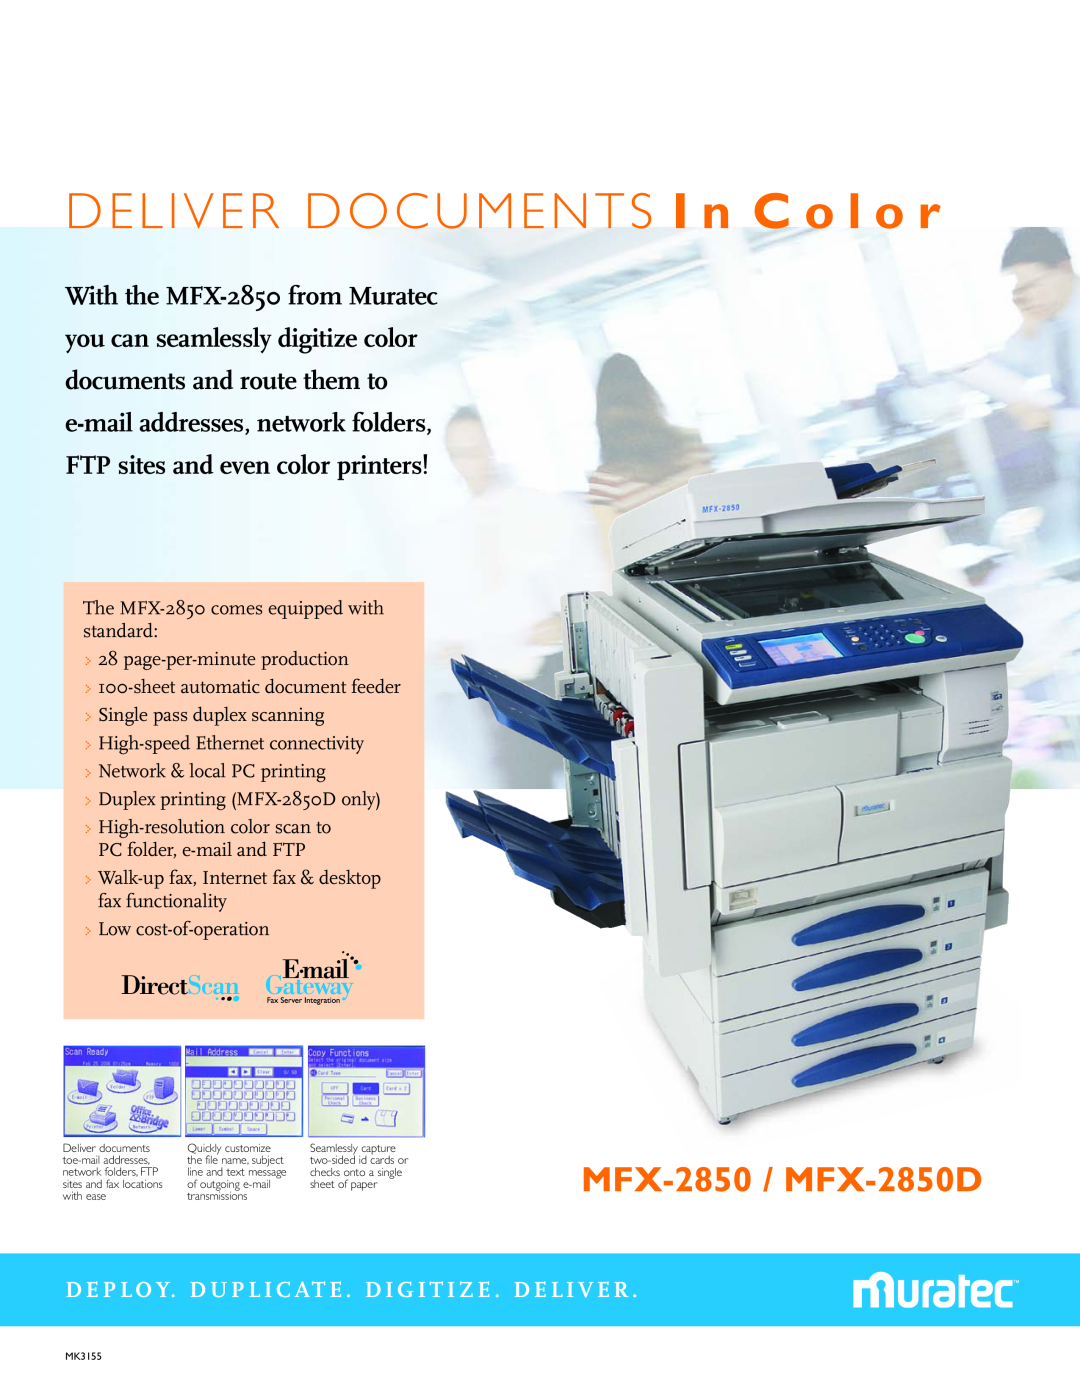 Muratec manual deliver documents I n C o l o r, MFX-2850 / MFX-2850D 